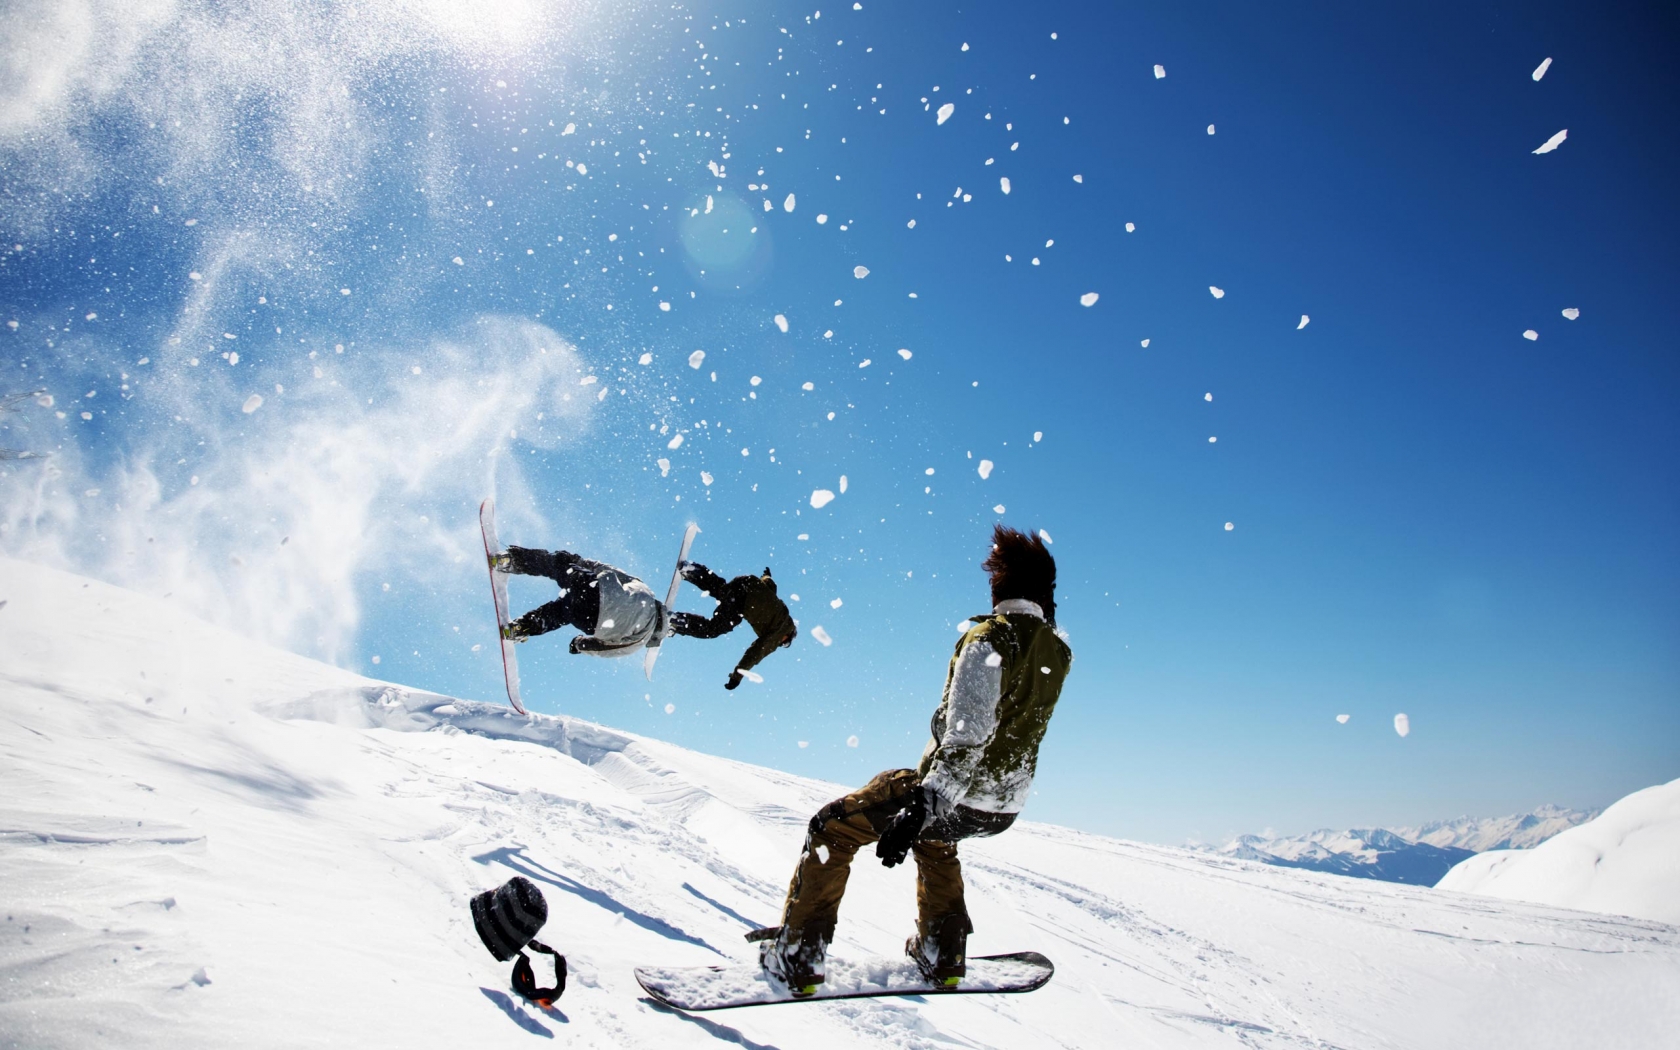 Winter Snowboarding for 1680 x 1050 widescreen resolution